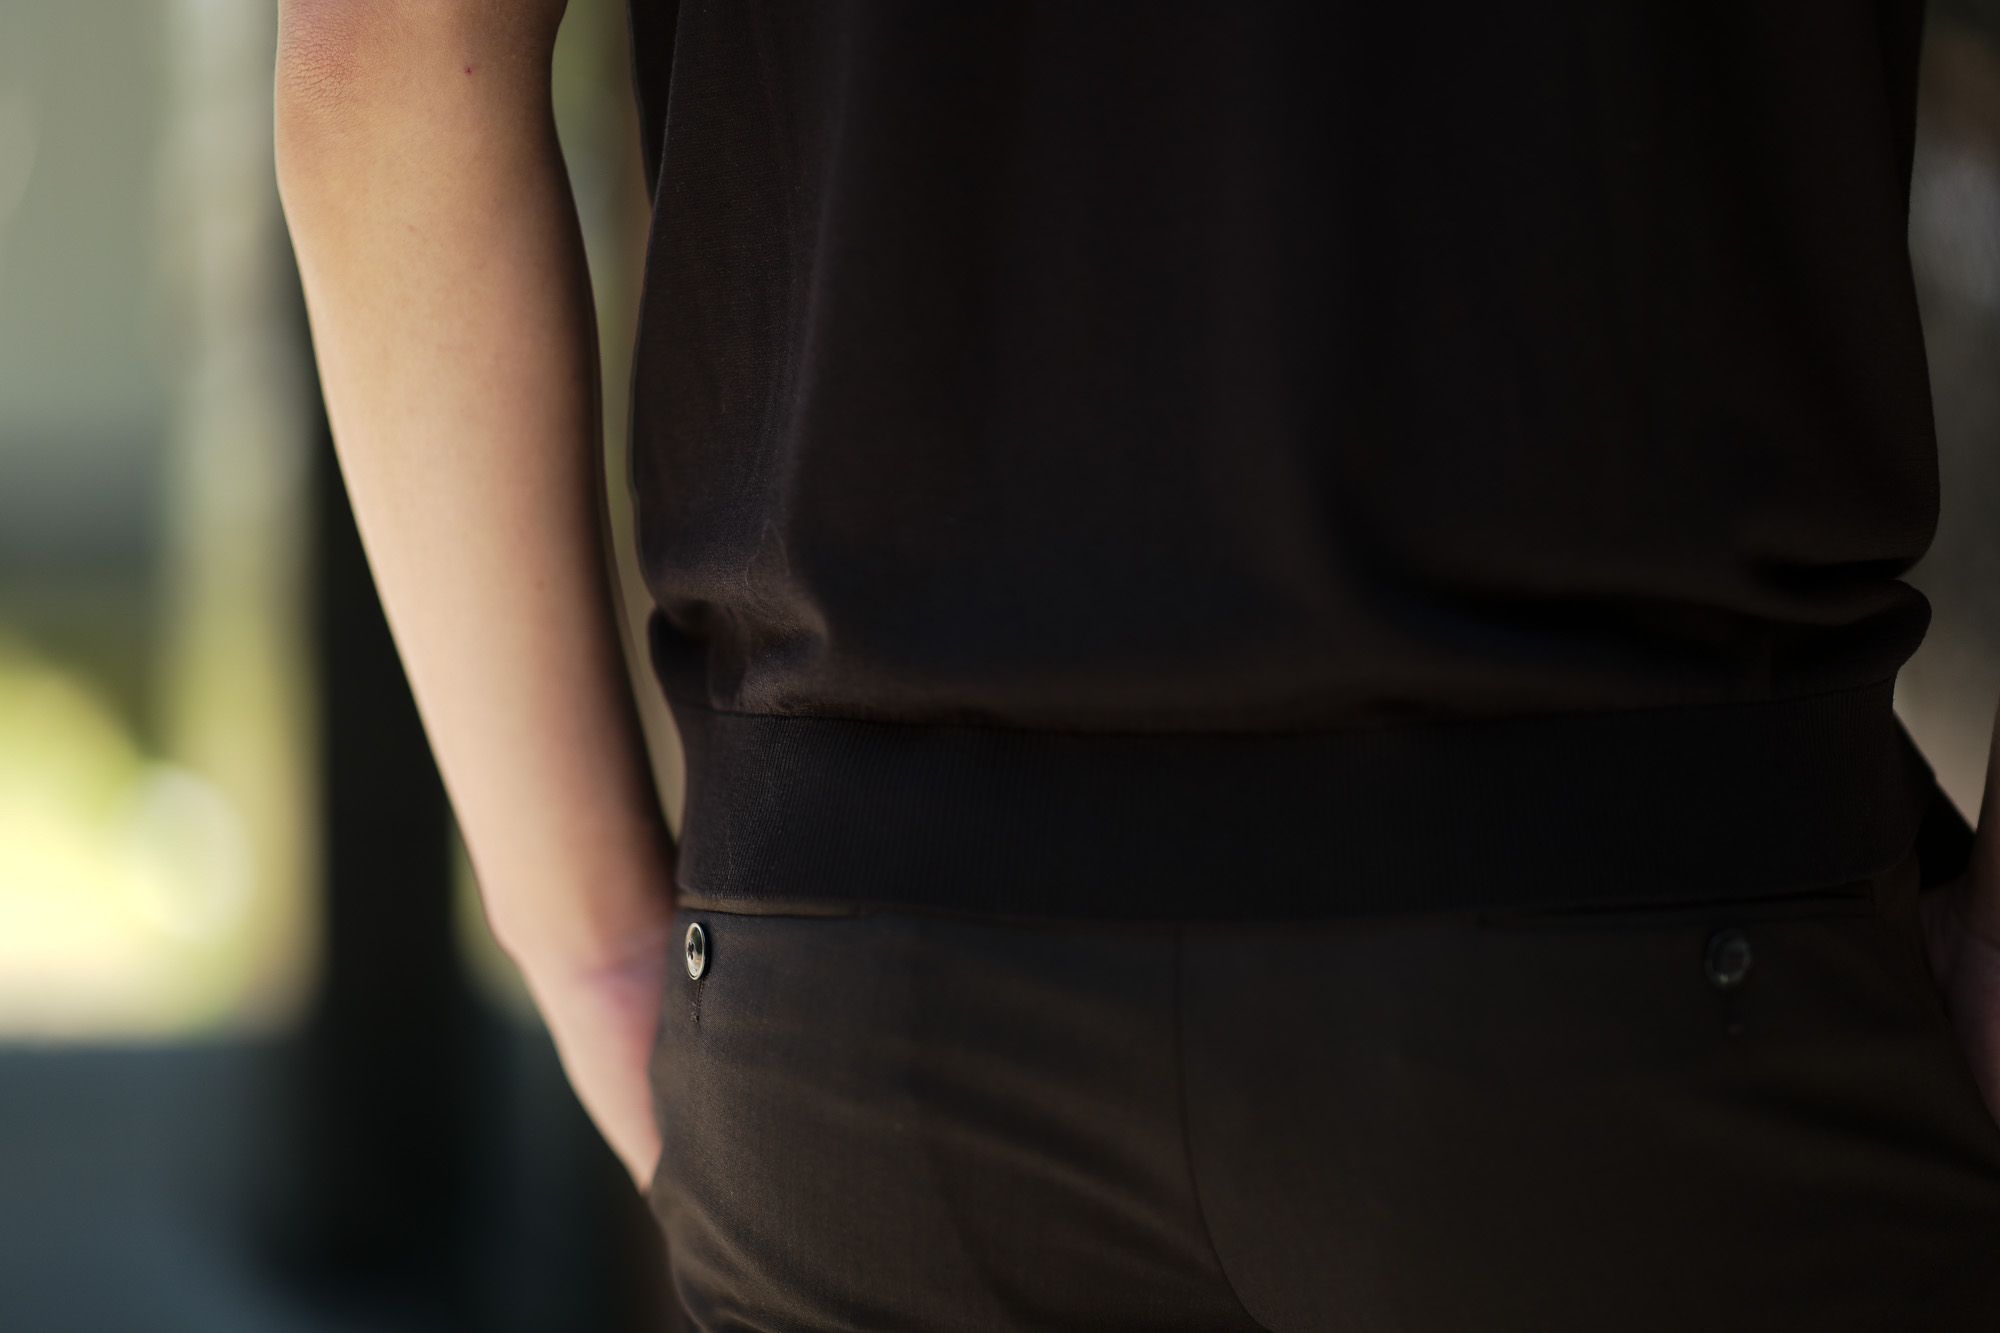 Gran Sasso (グランサッソ) Silk Knit T-shirt (シルクニット Tシャツ) SETA (シルク 100%) ショートスリーブ シルク ニット Tシャツ BLACK (ブラック・099) made in italy (イタリア製) 2019 春夏新作 gransasso 愛知 名古屋 altoediritto アルトエデリット